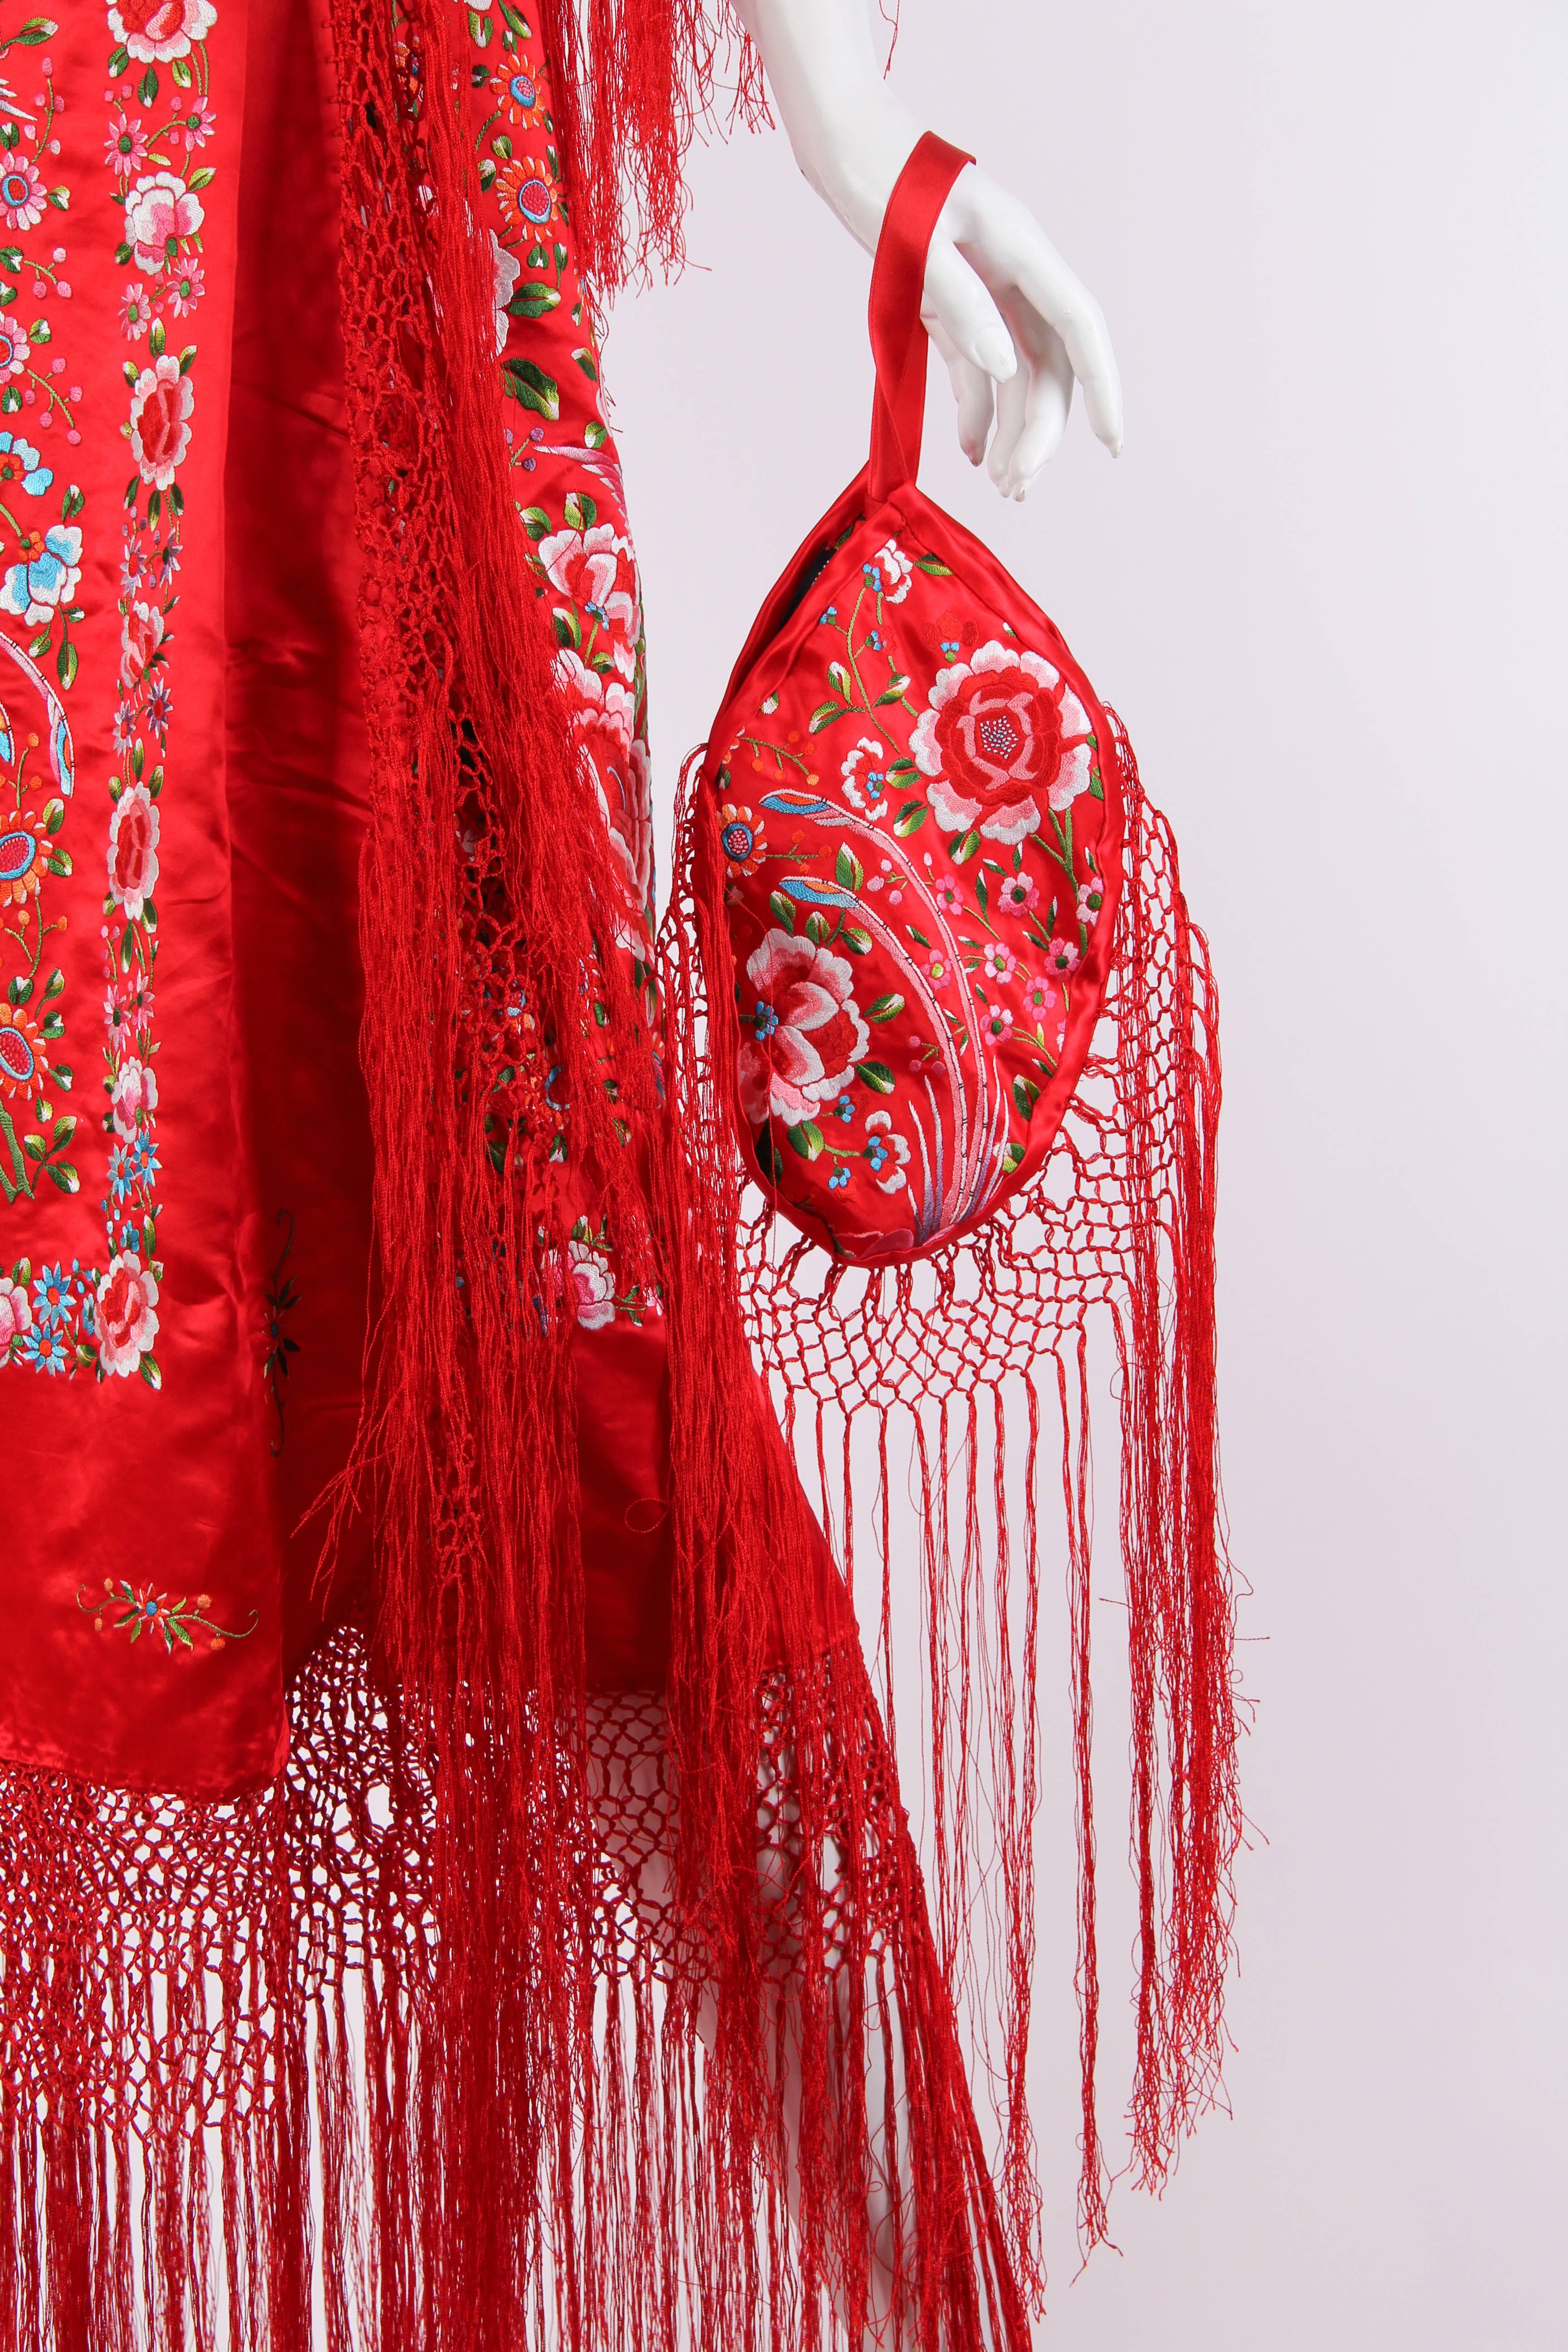 Phenomenal Hand-Embroidered Chinese Shawl Dress with Fringe 4